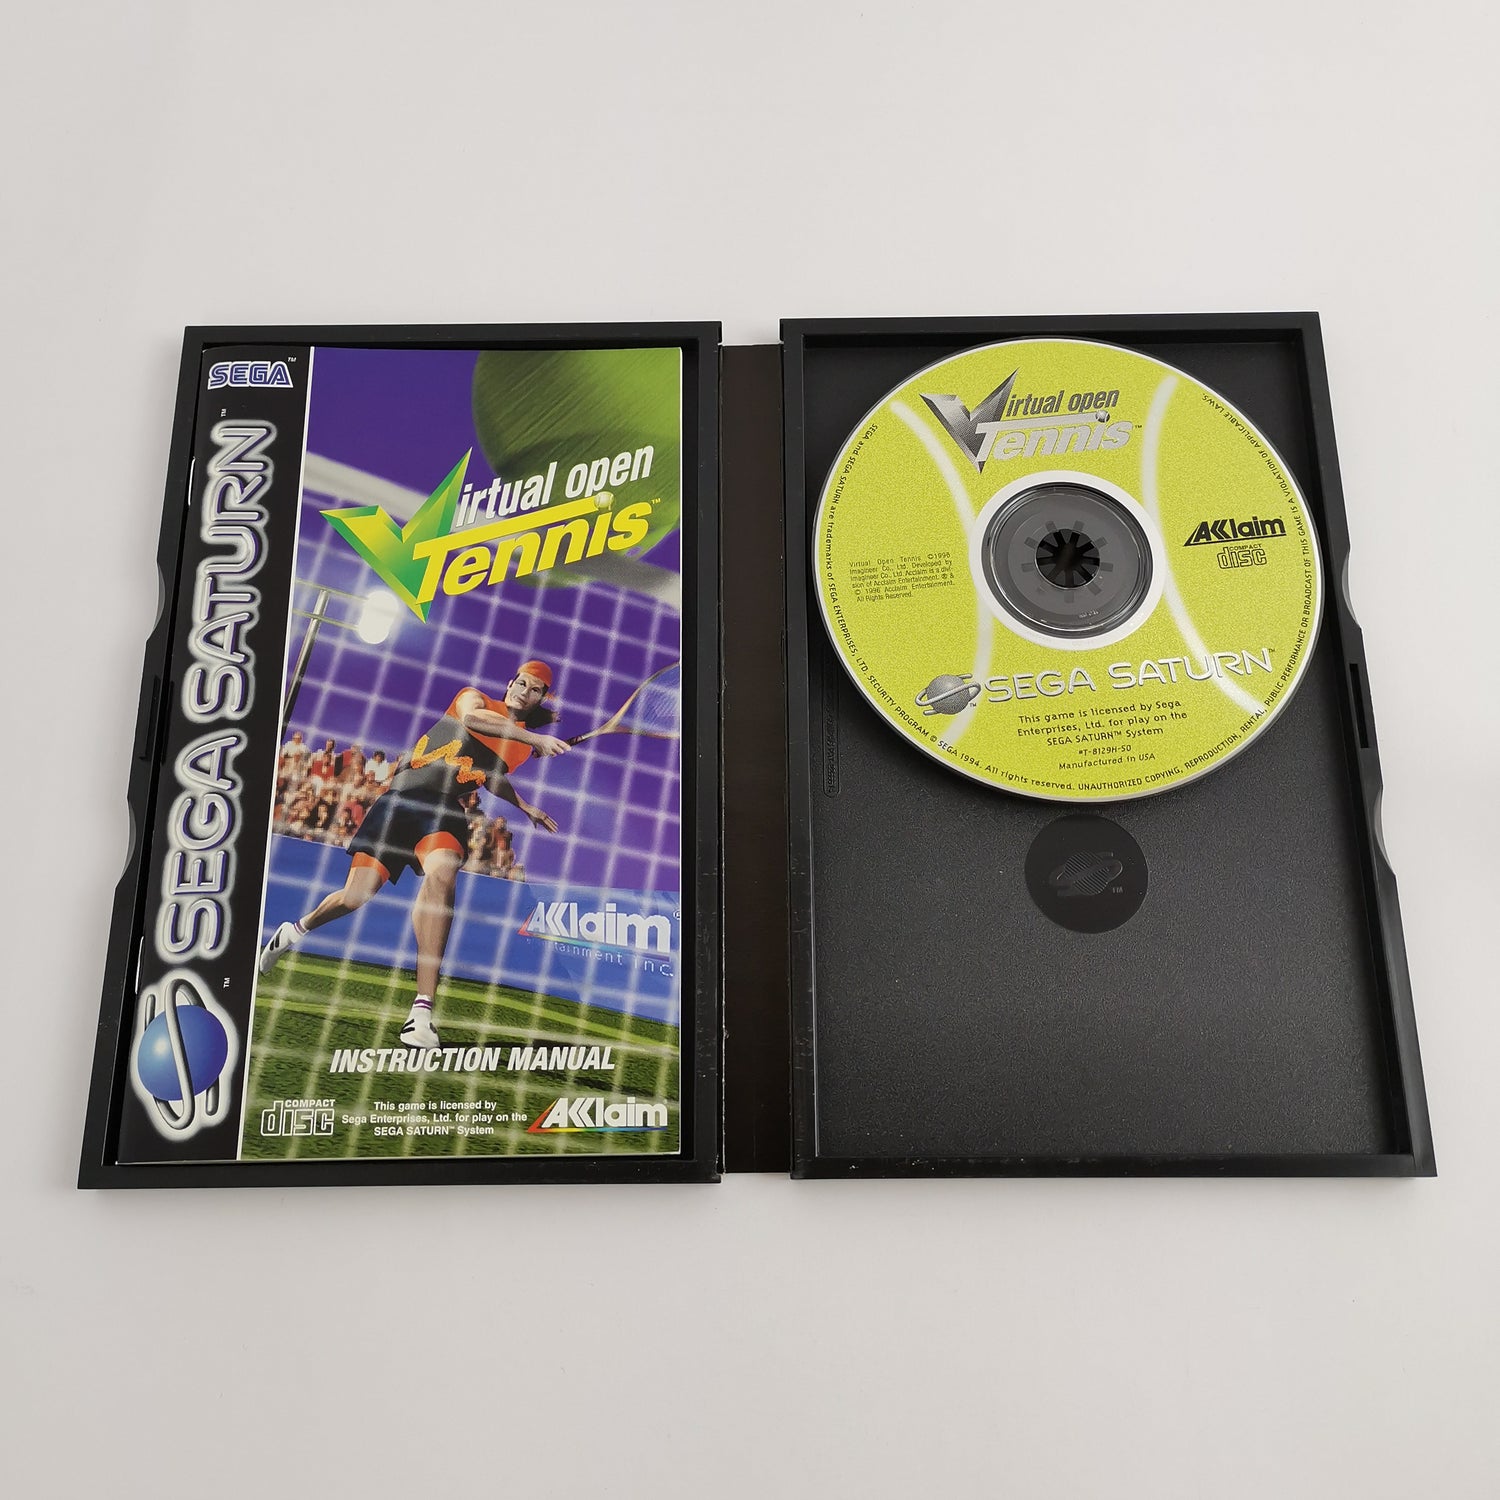 Sega Saturn Game: Virtual Open Tennis | SegaSaturn - original packaging PAL version